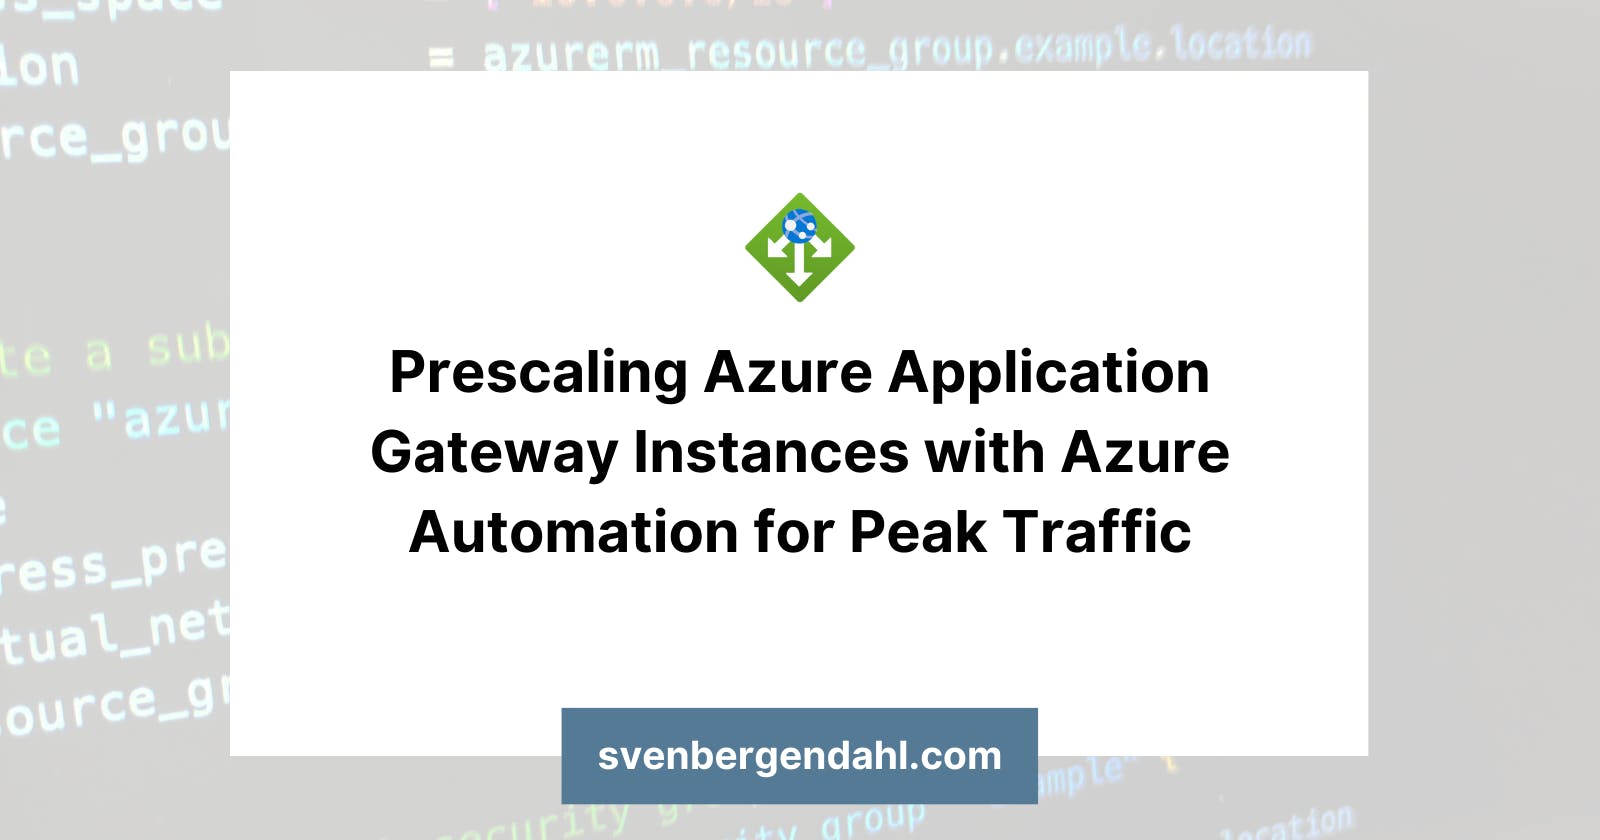 Prescaling Azure Application Gateway Instances with Azure Automation for Peak Traffic